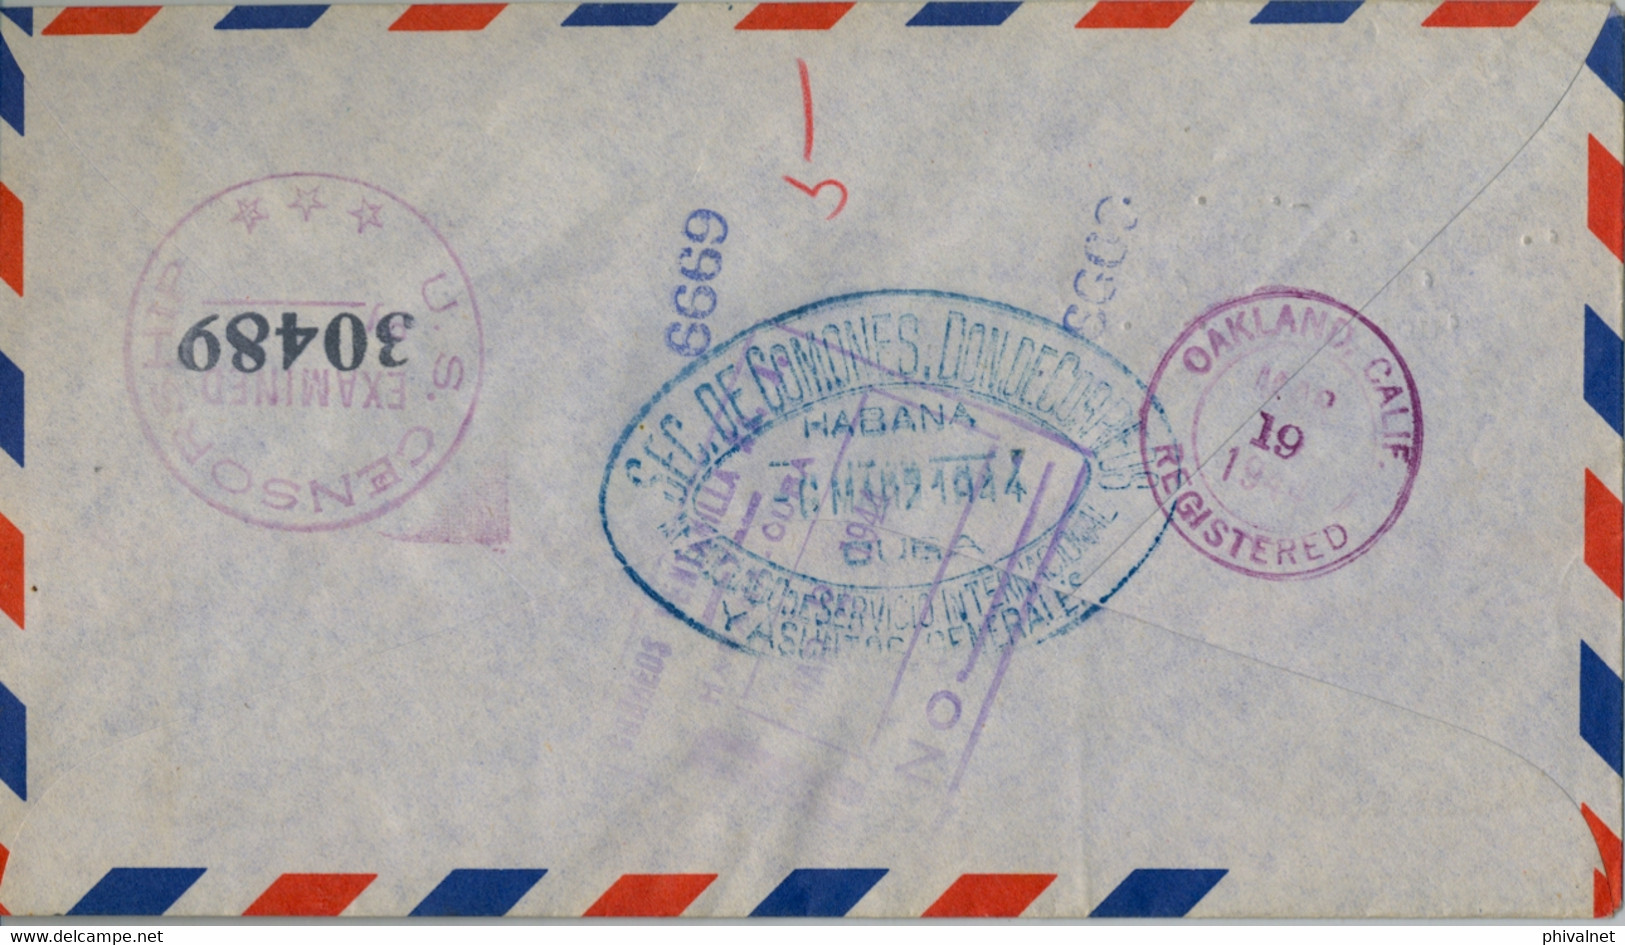 1944 CUBA , CERTIFICADO VIA AIRMAIL , HABANA - OAKLAND , CENSURA , NEGOCIADO DE SERVICIO INTERNACIONAL , LLEGADA - Storia Postale